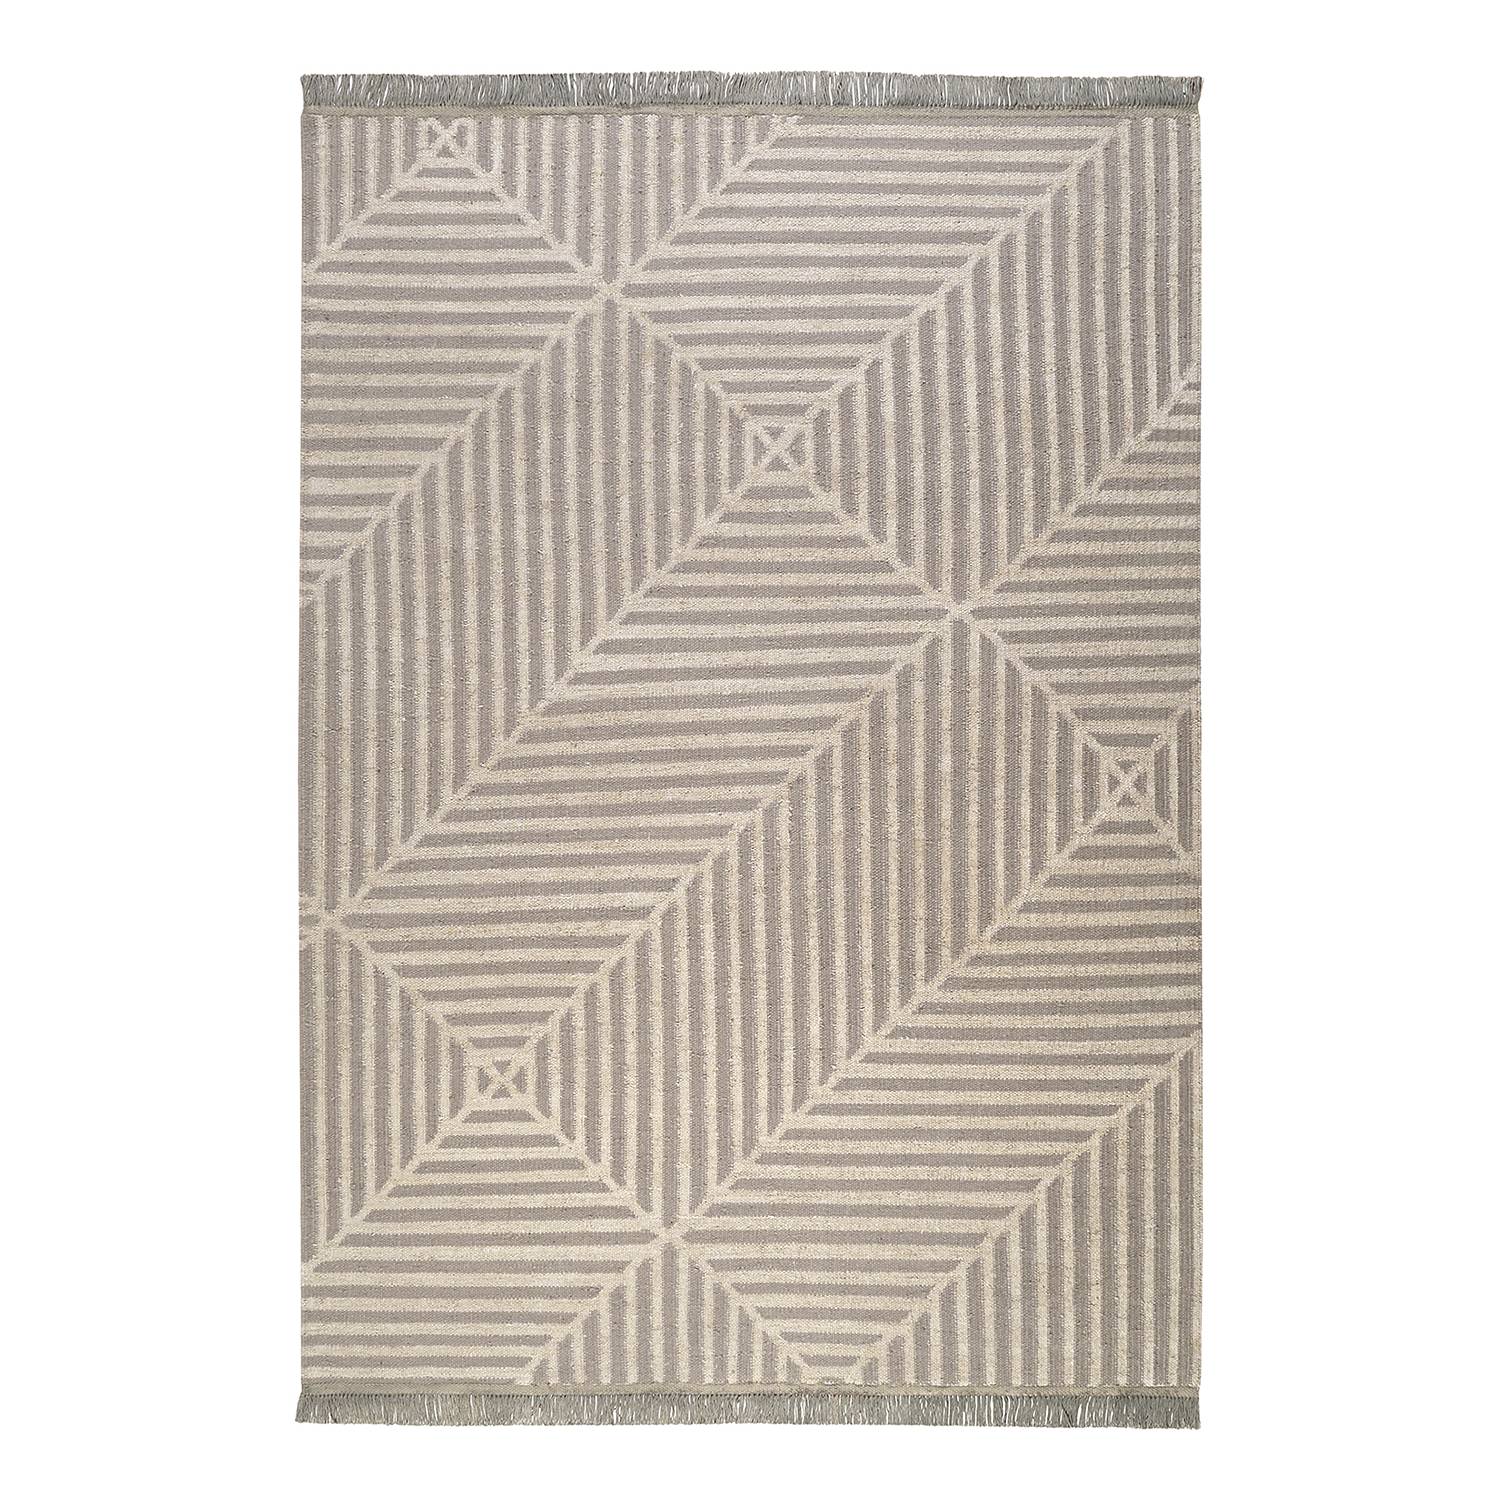 Teppich Irregular Fields (handgewebt) - Mischgewebe - Grau / Creme - 160 x 230 cm, carpets&co